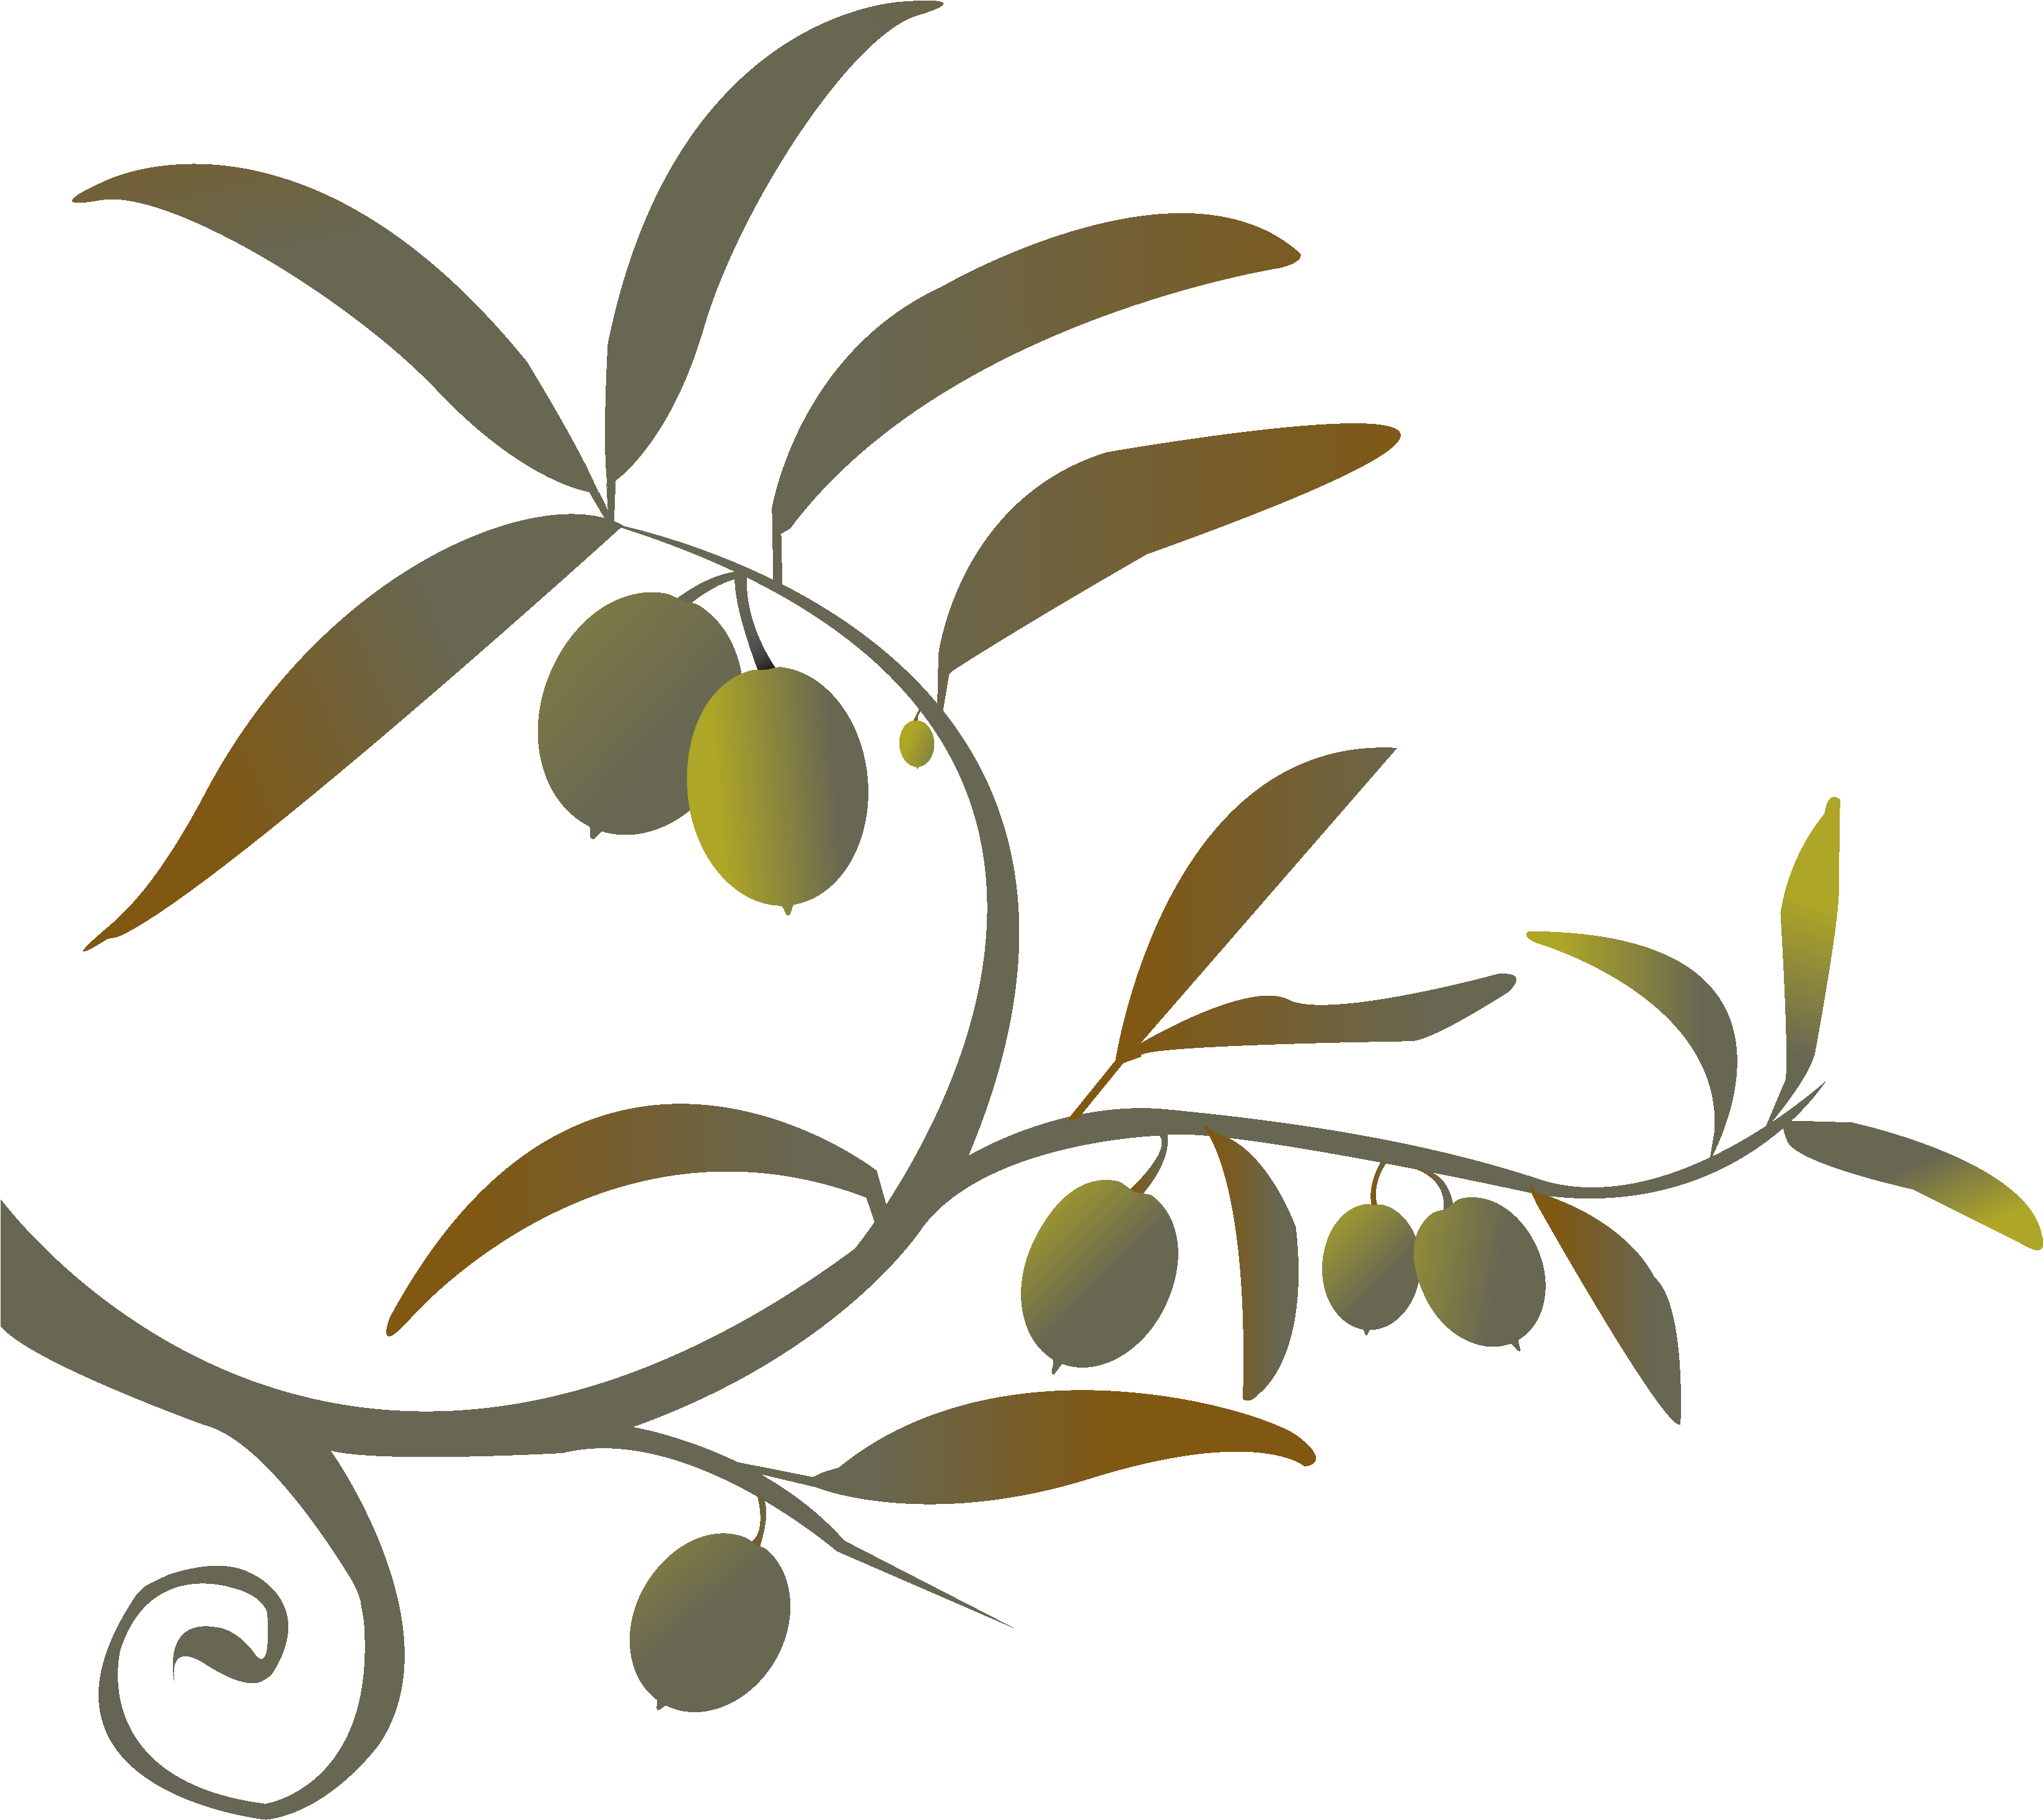 Olive Branch - Olive Branch (3306x3030)